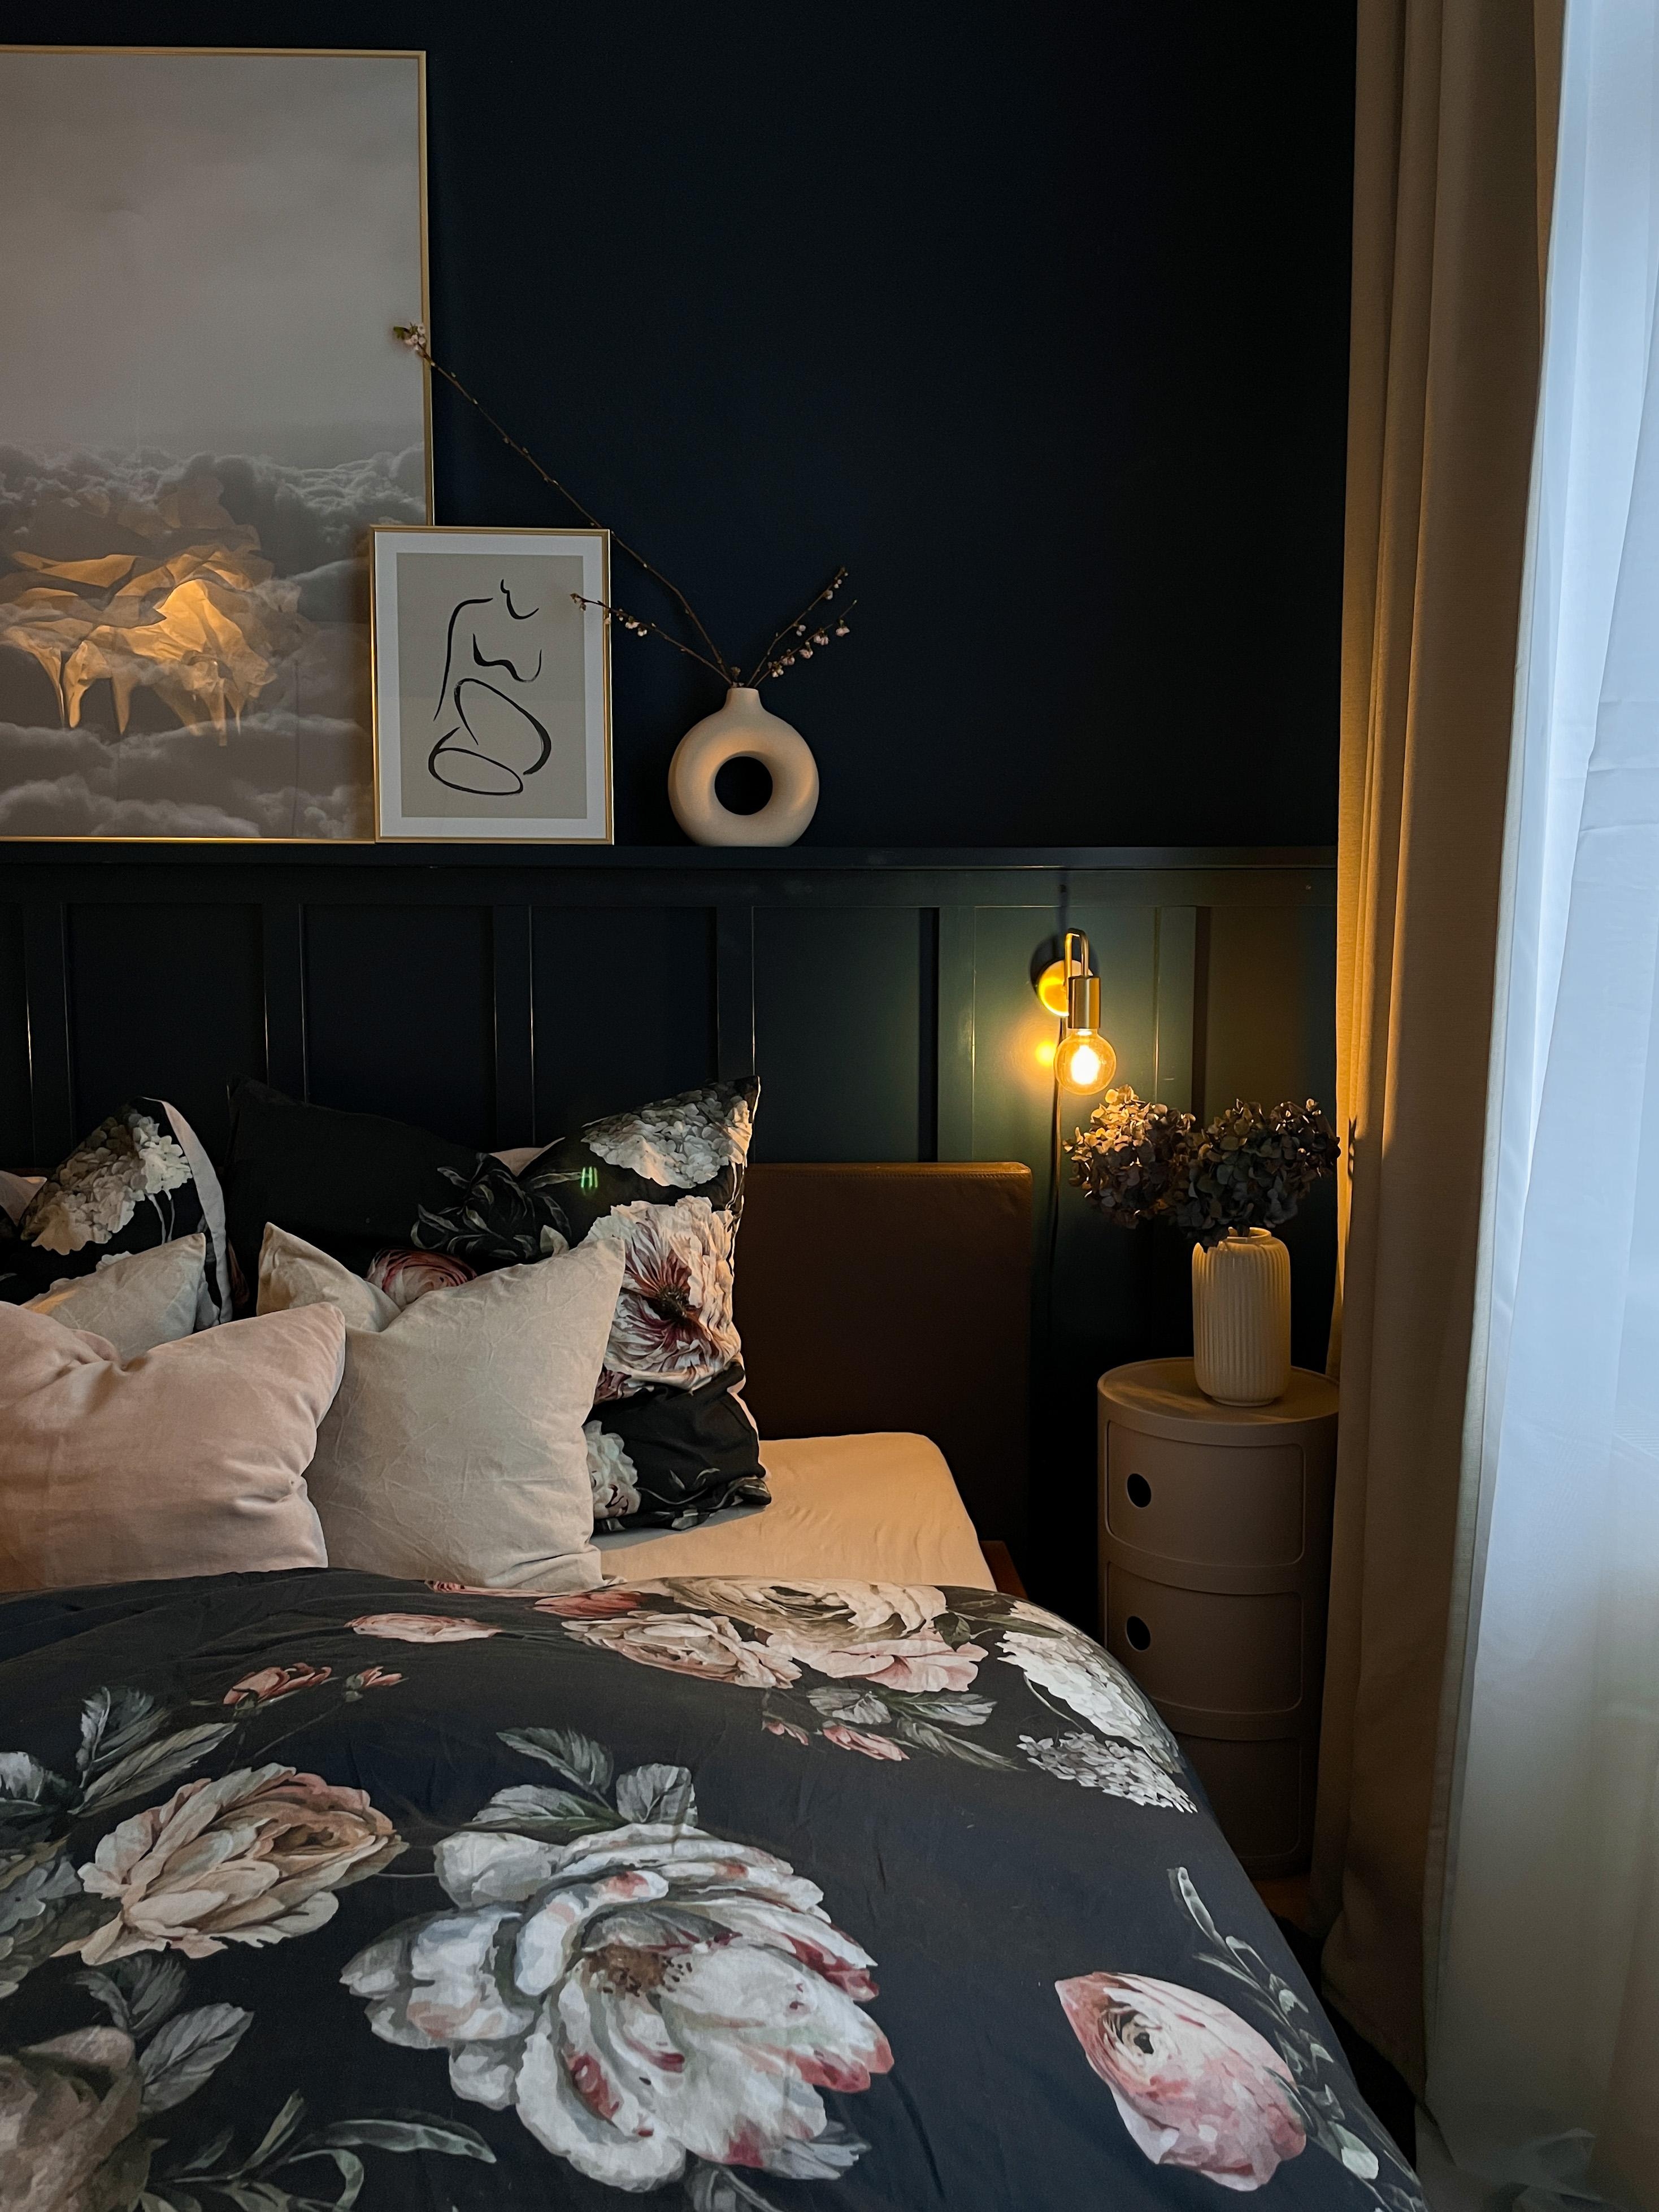 Bedroom ✨💙
#bedroom #details #flowers #cozy #darkblue #blueberry